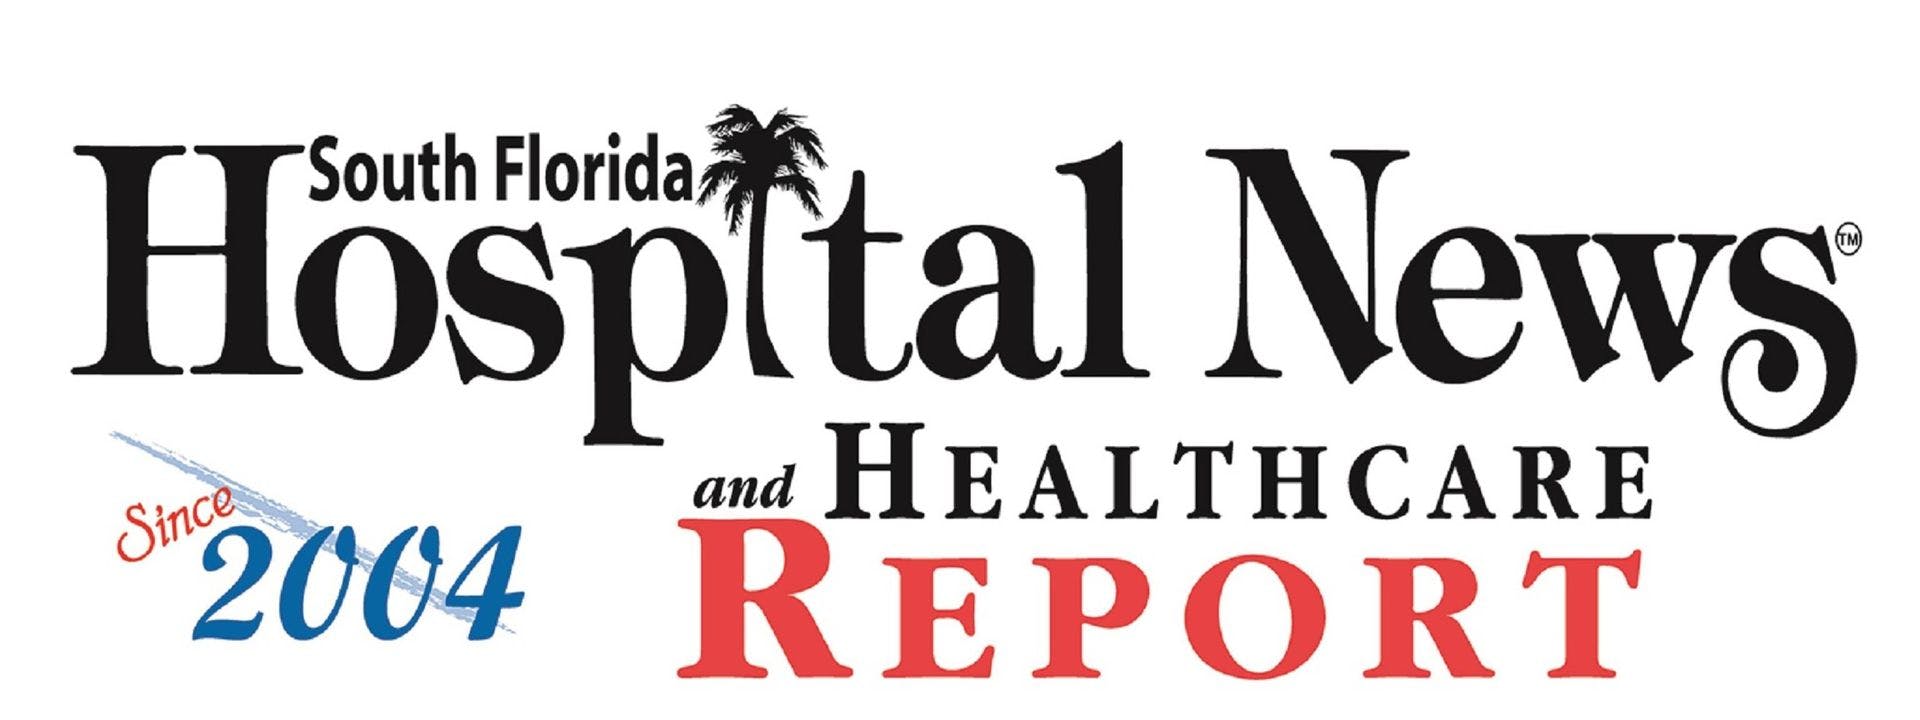 Salute to Doctors - South Florida Hospital News